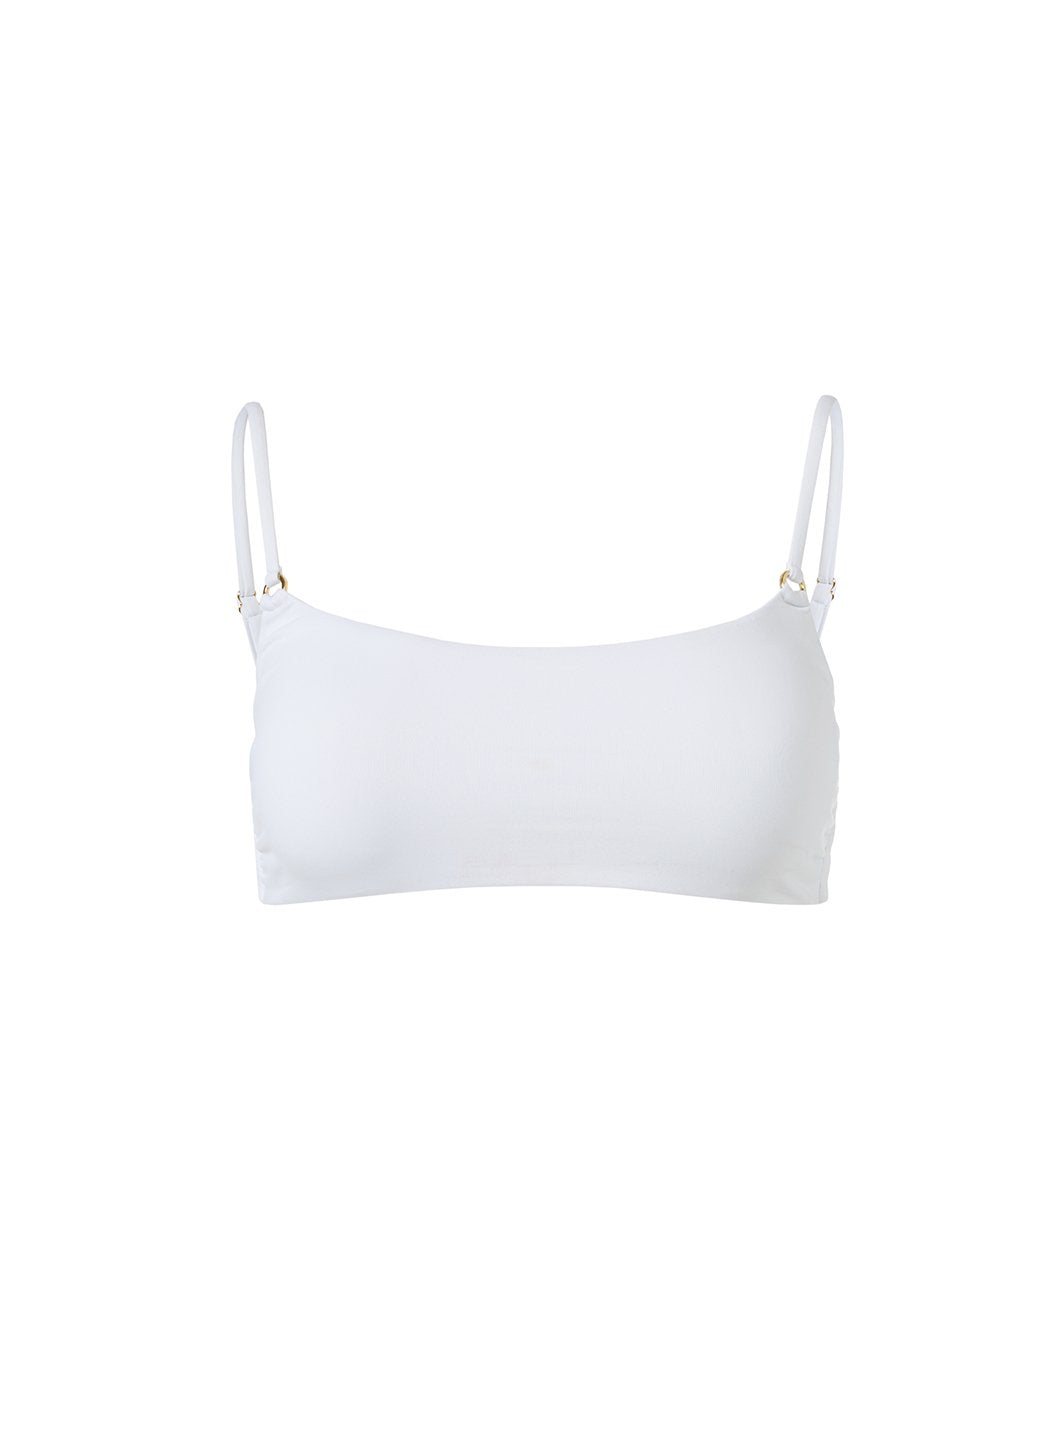 Melissa Odabash Capri White Sporty Bralette Bikini | Official Website